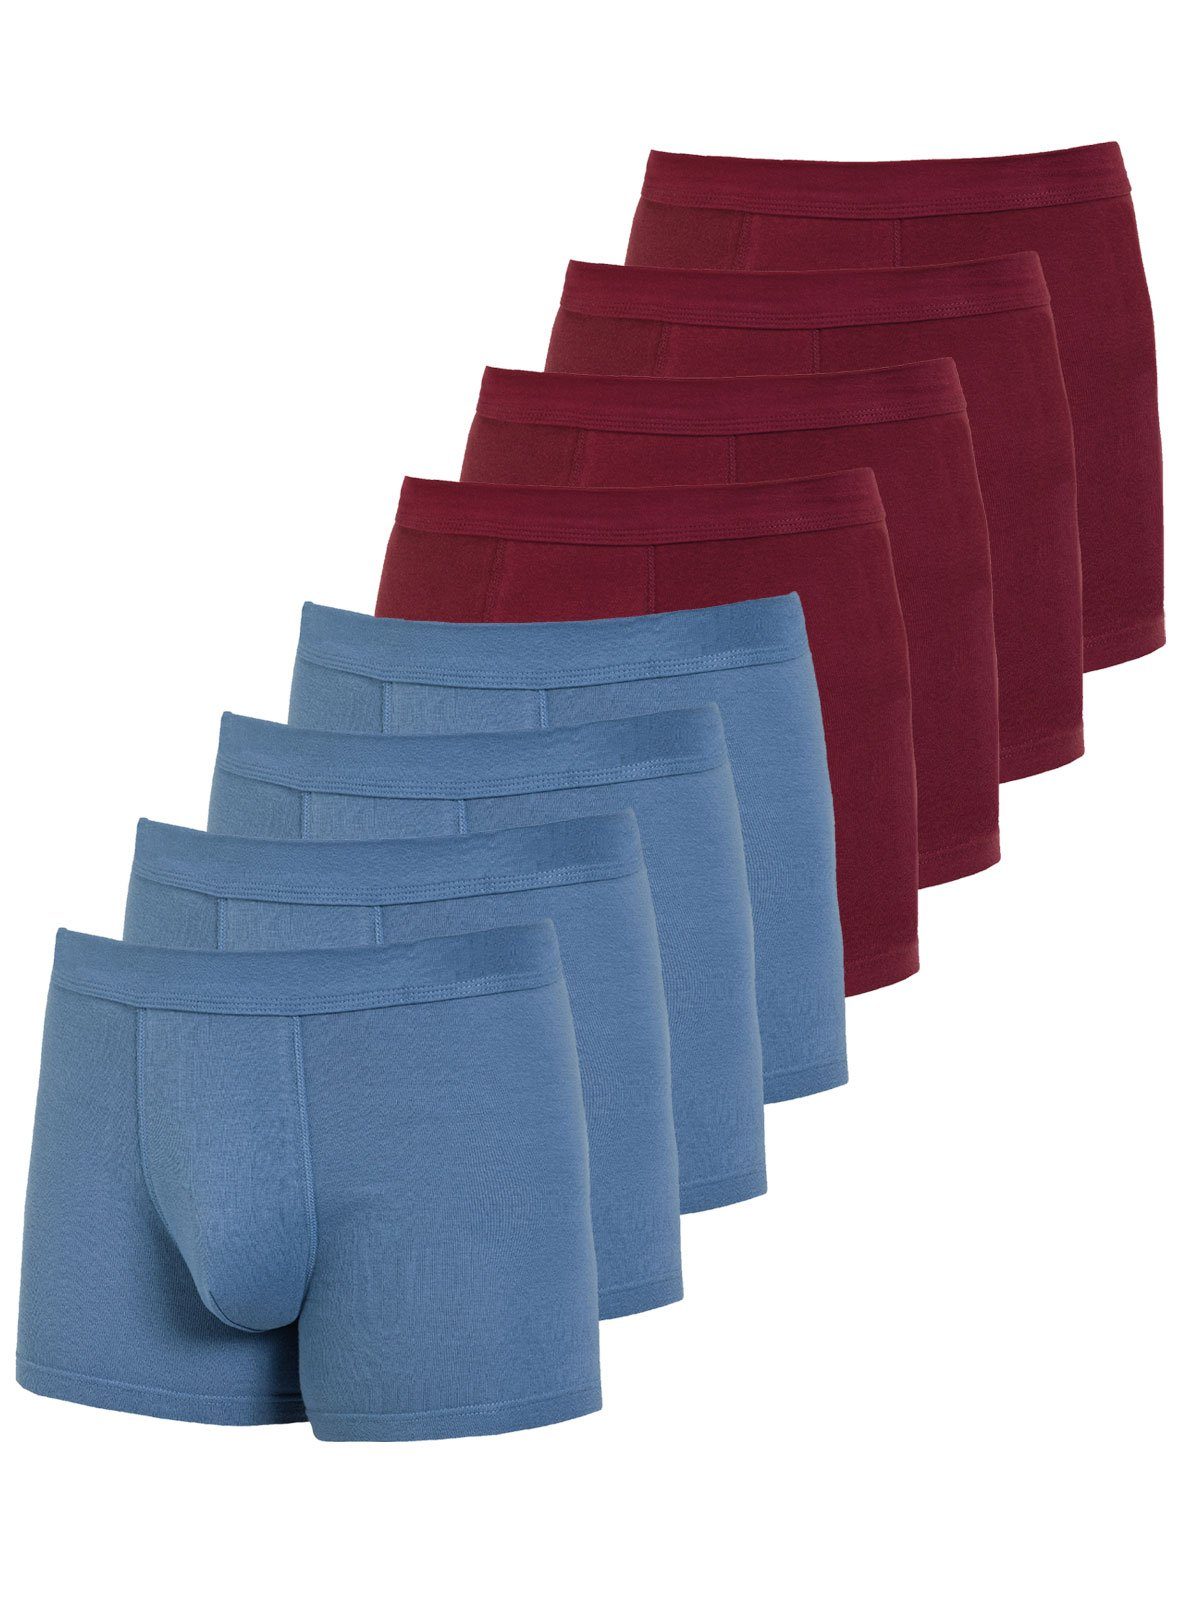 Pants Herren 8er Retro Sparpack Bio rubin - (Spar-Set, KUMPF Pants atlantis 8-St) Cotton